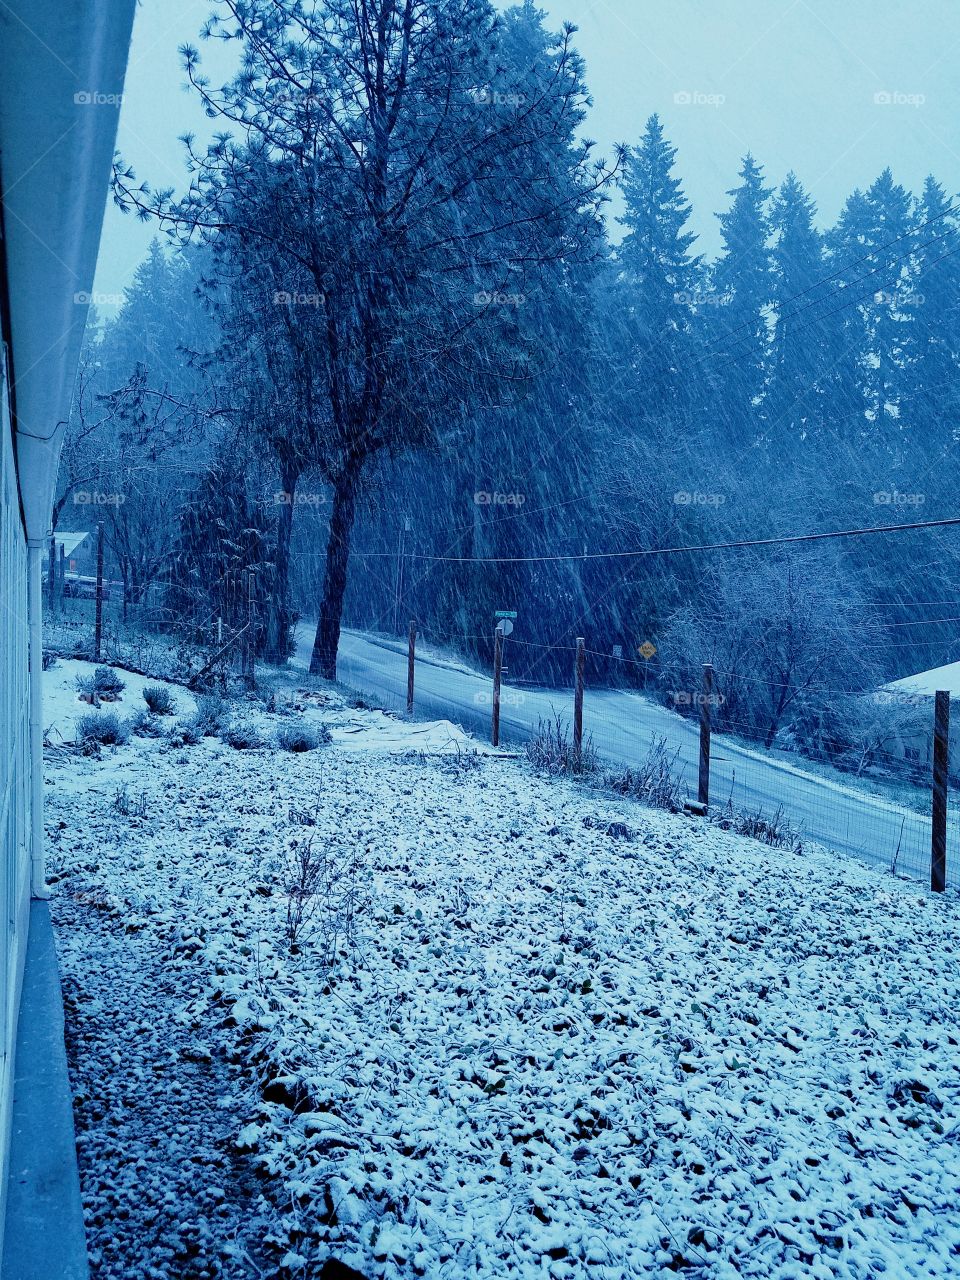 Snowing in my yard